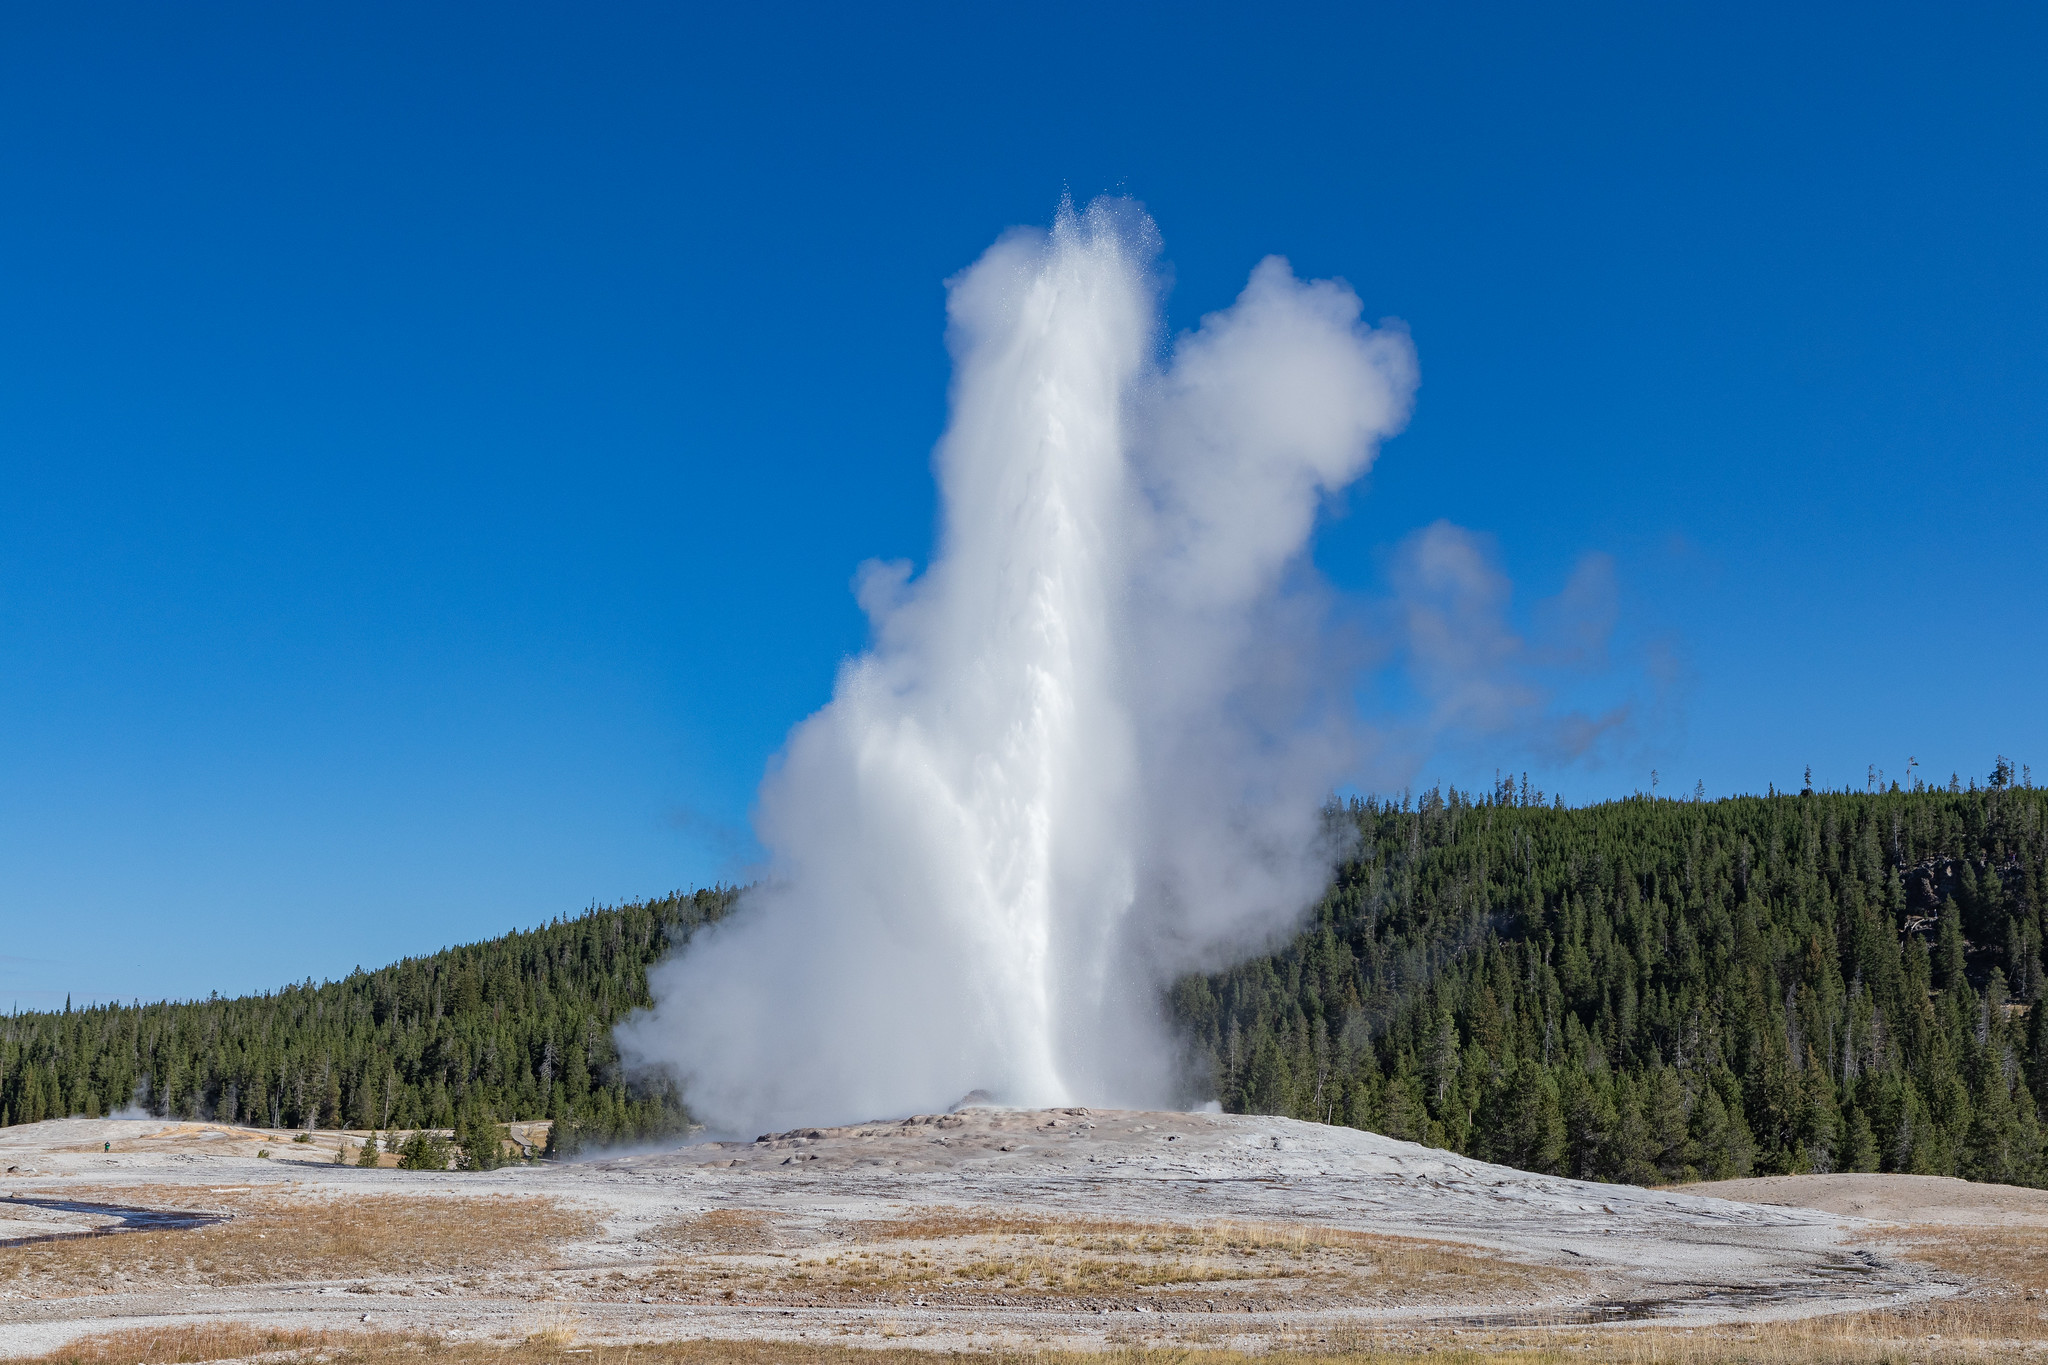 Le geyser Old Faithful en pleine éruption au parc national de Yellowstone